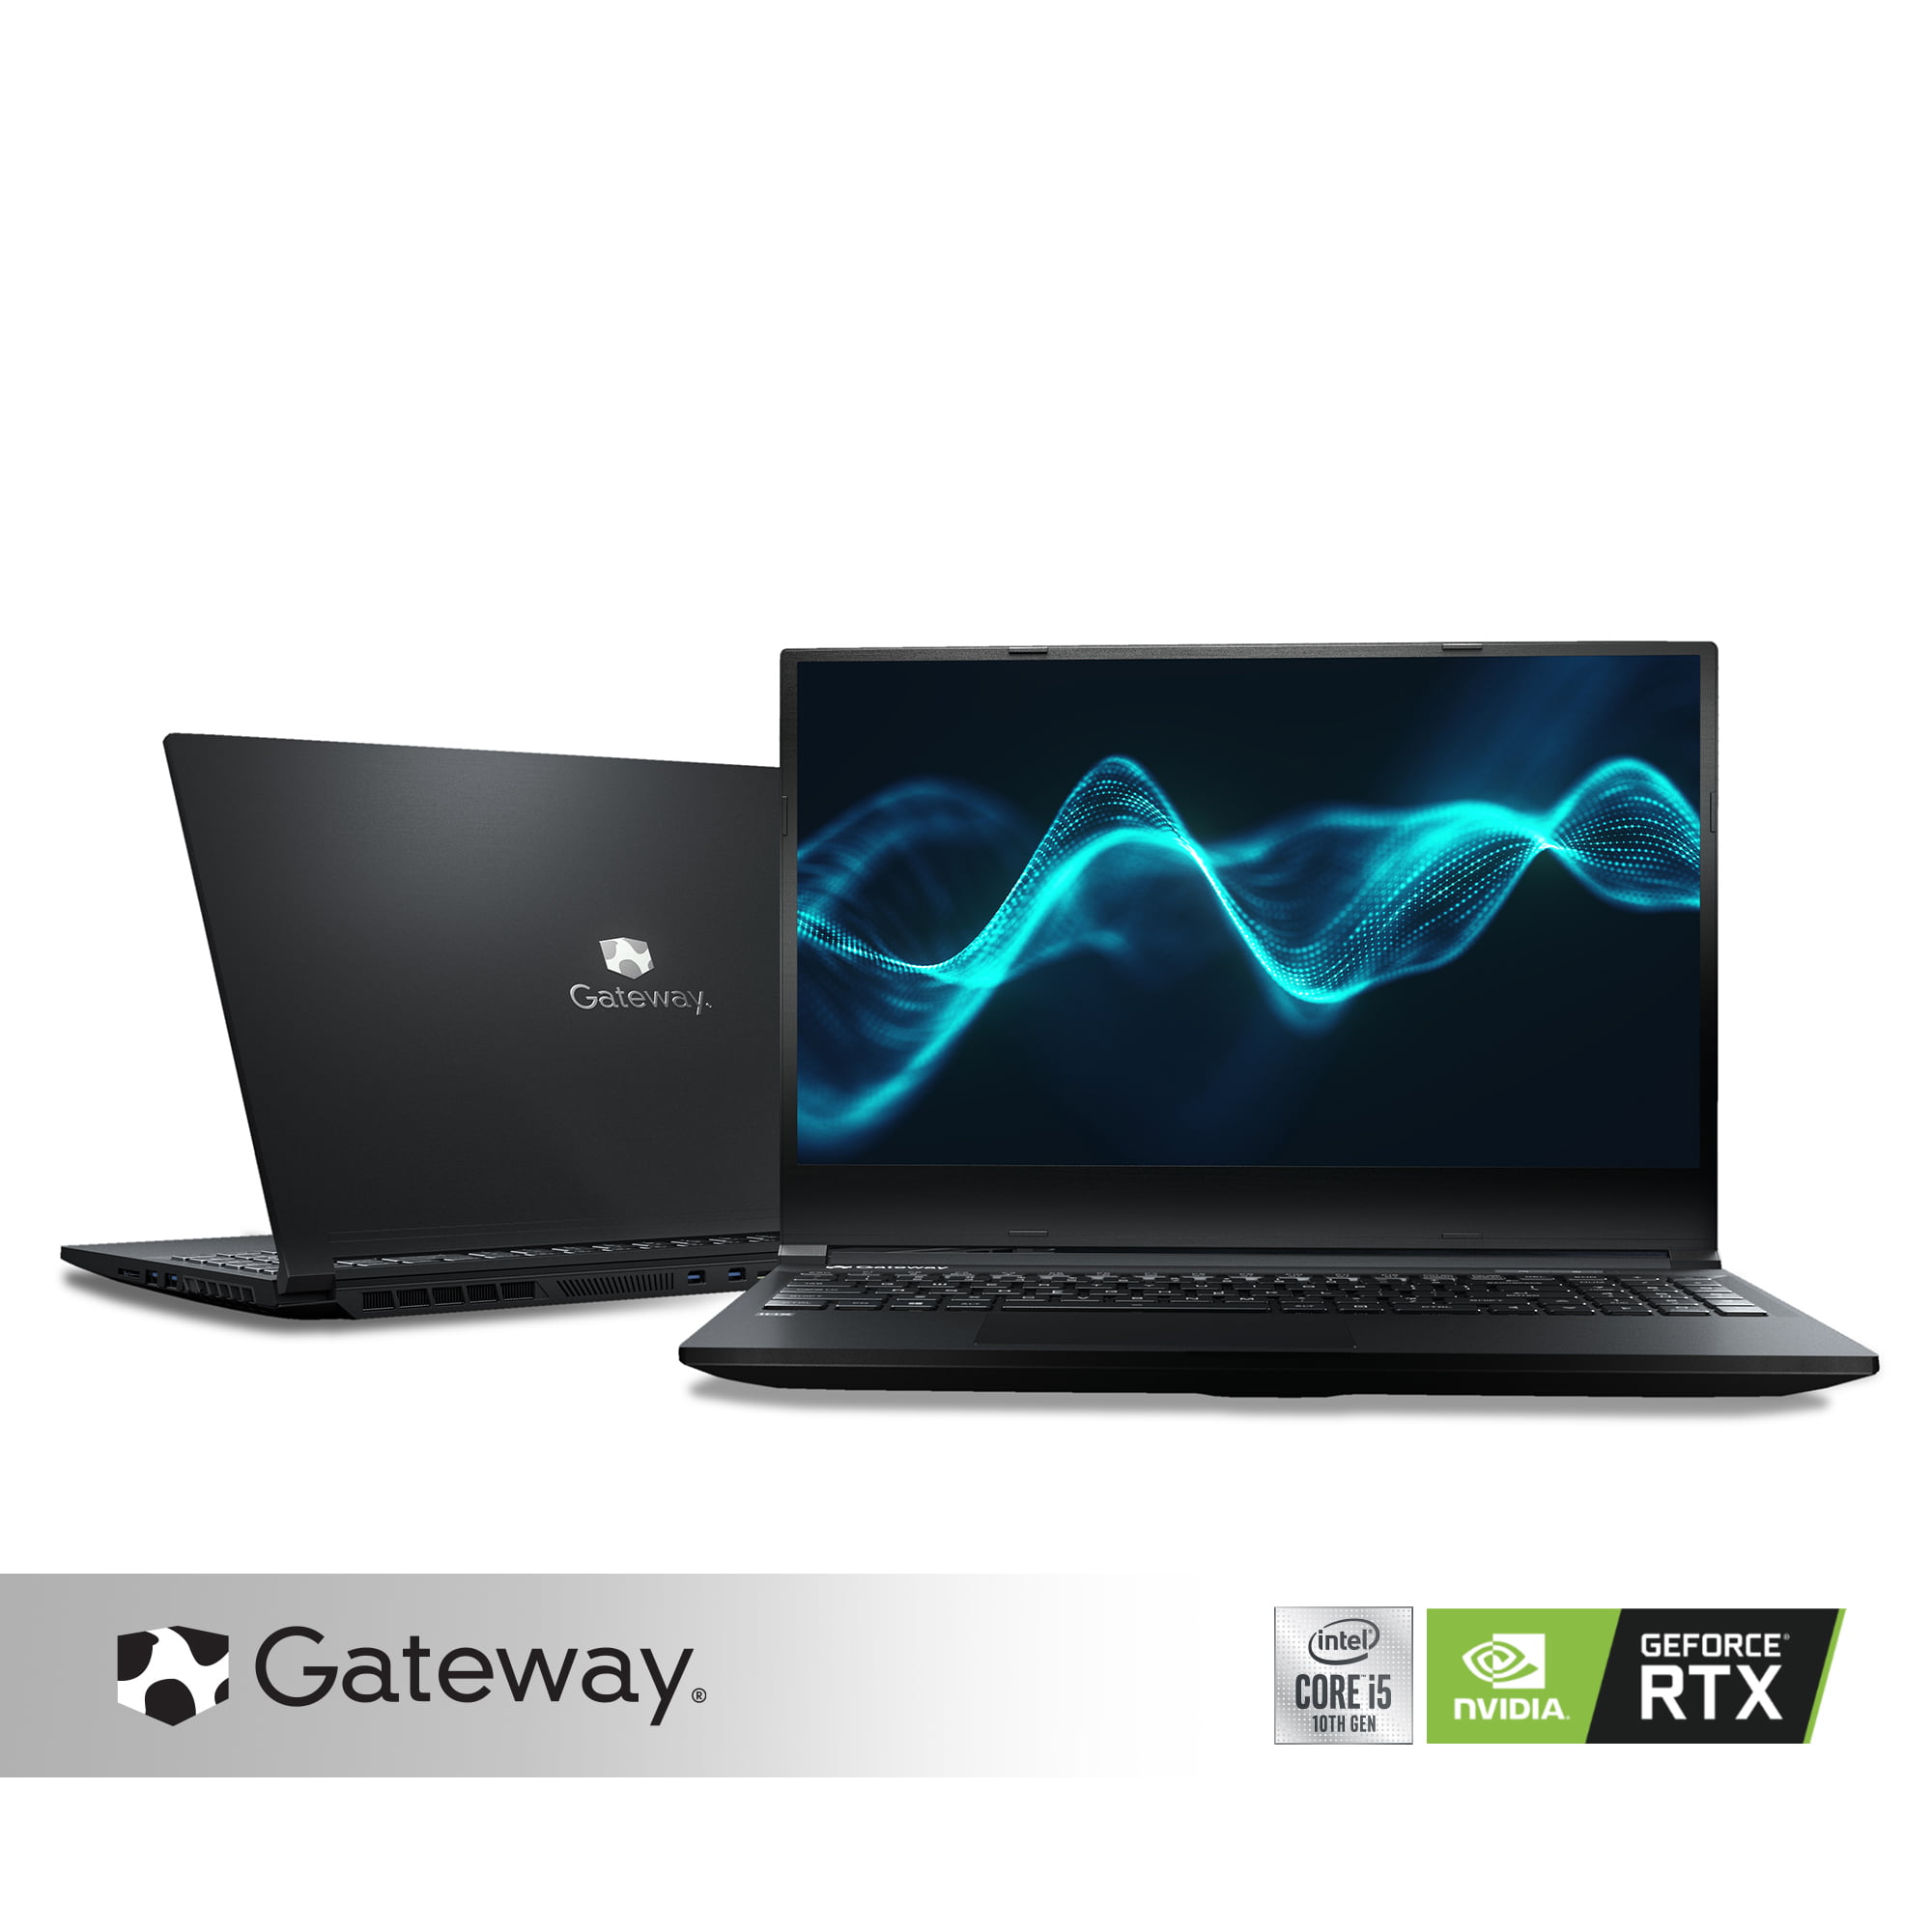 Gateway Creator Series 15.6" FHD Performance Notebook, Intel i5-10300H, NVIDIA 2060 RTX, 8GB RAM, 256GB SSD Windows 10 Home $649.99